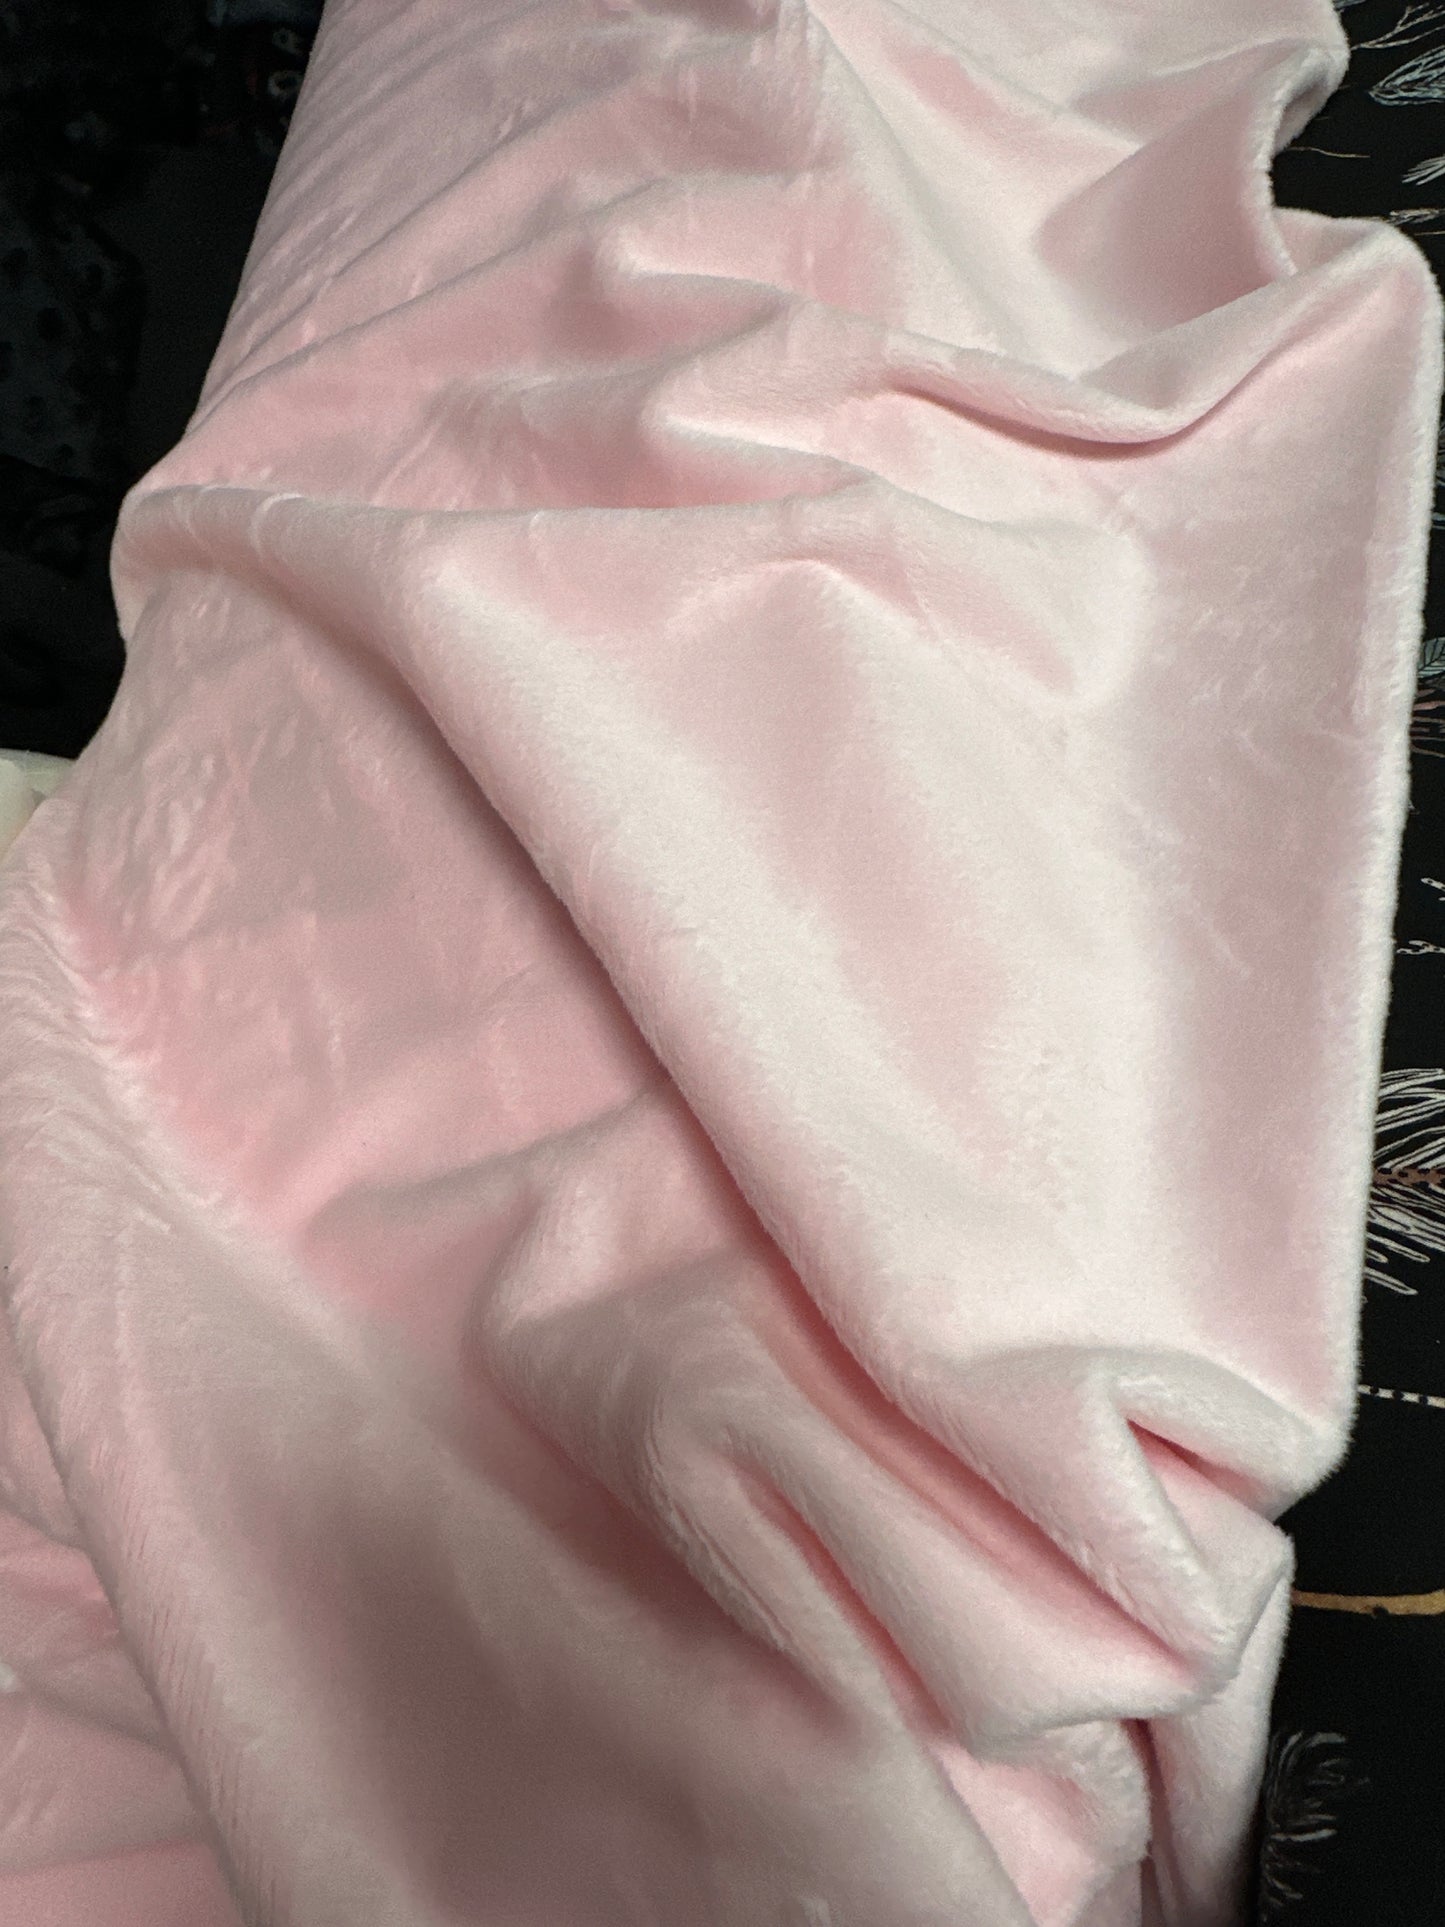 Minky - Shannon Fabrics - Blush Cuddle Solid